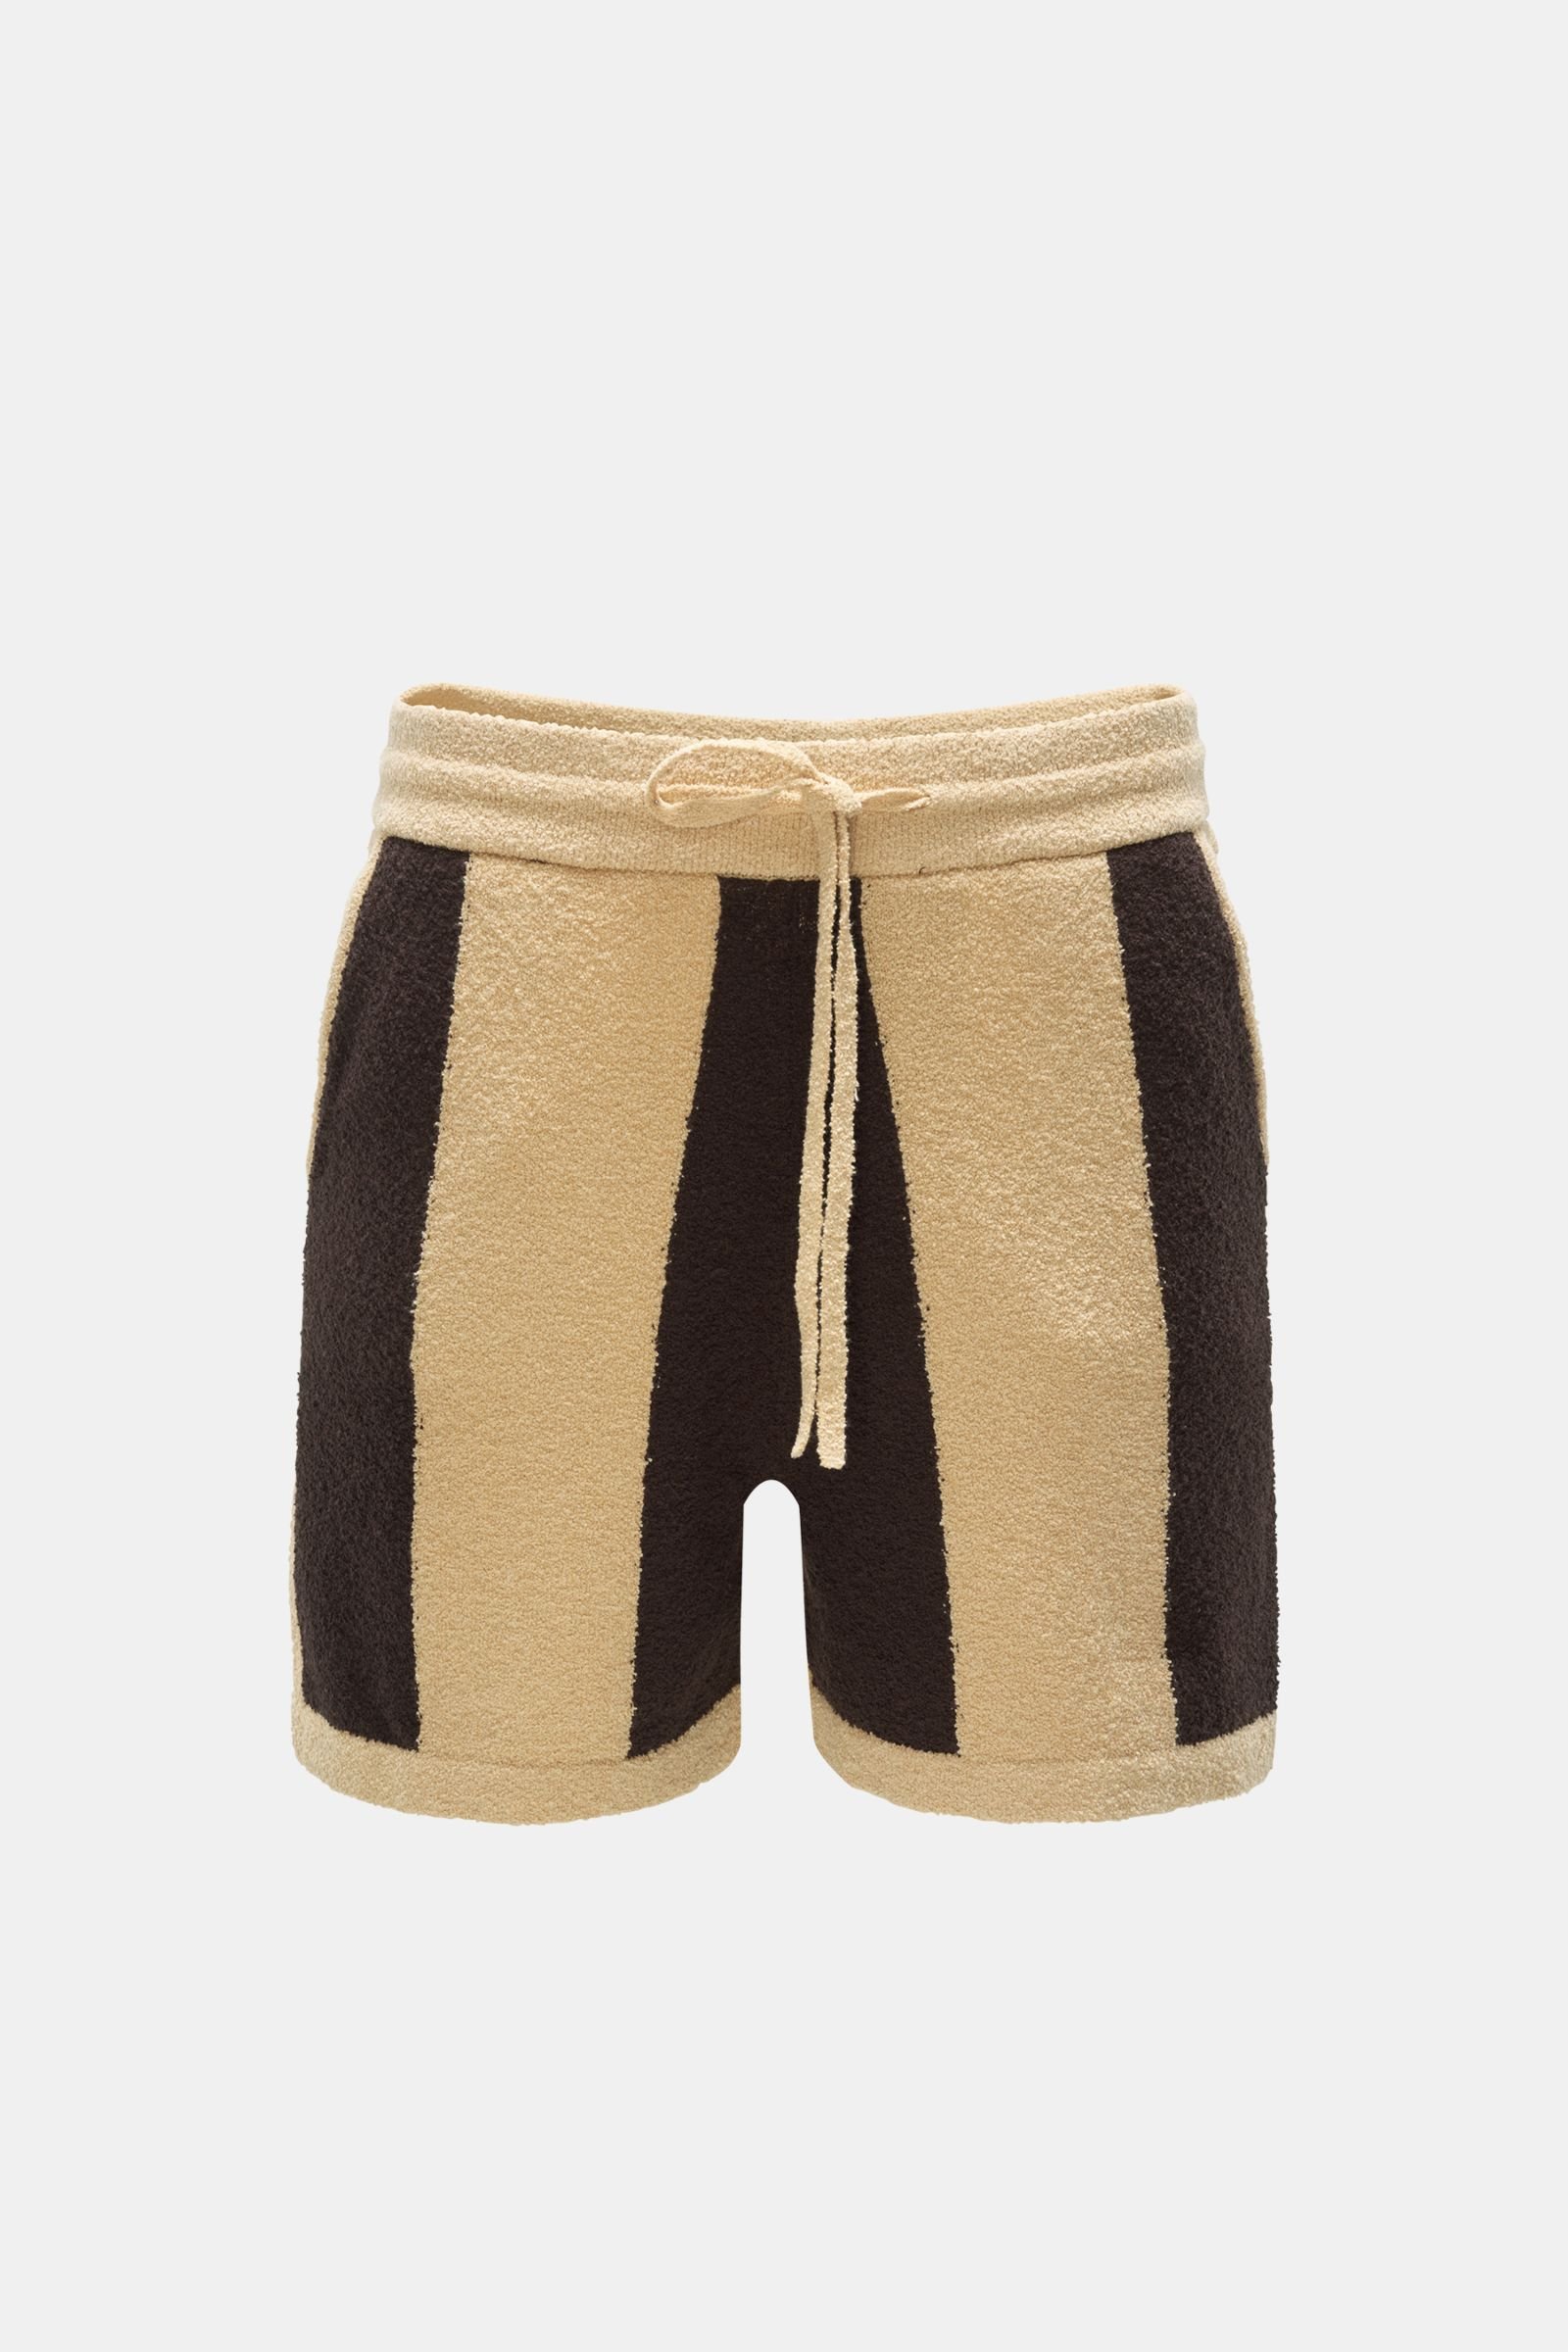 Terry shorts 'Brent' light brown/dark brown striped